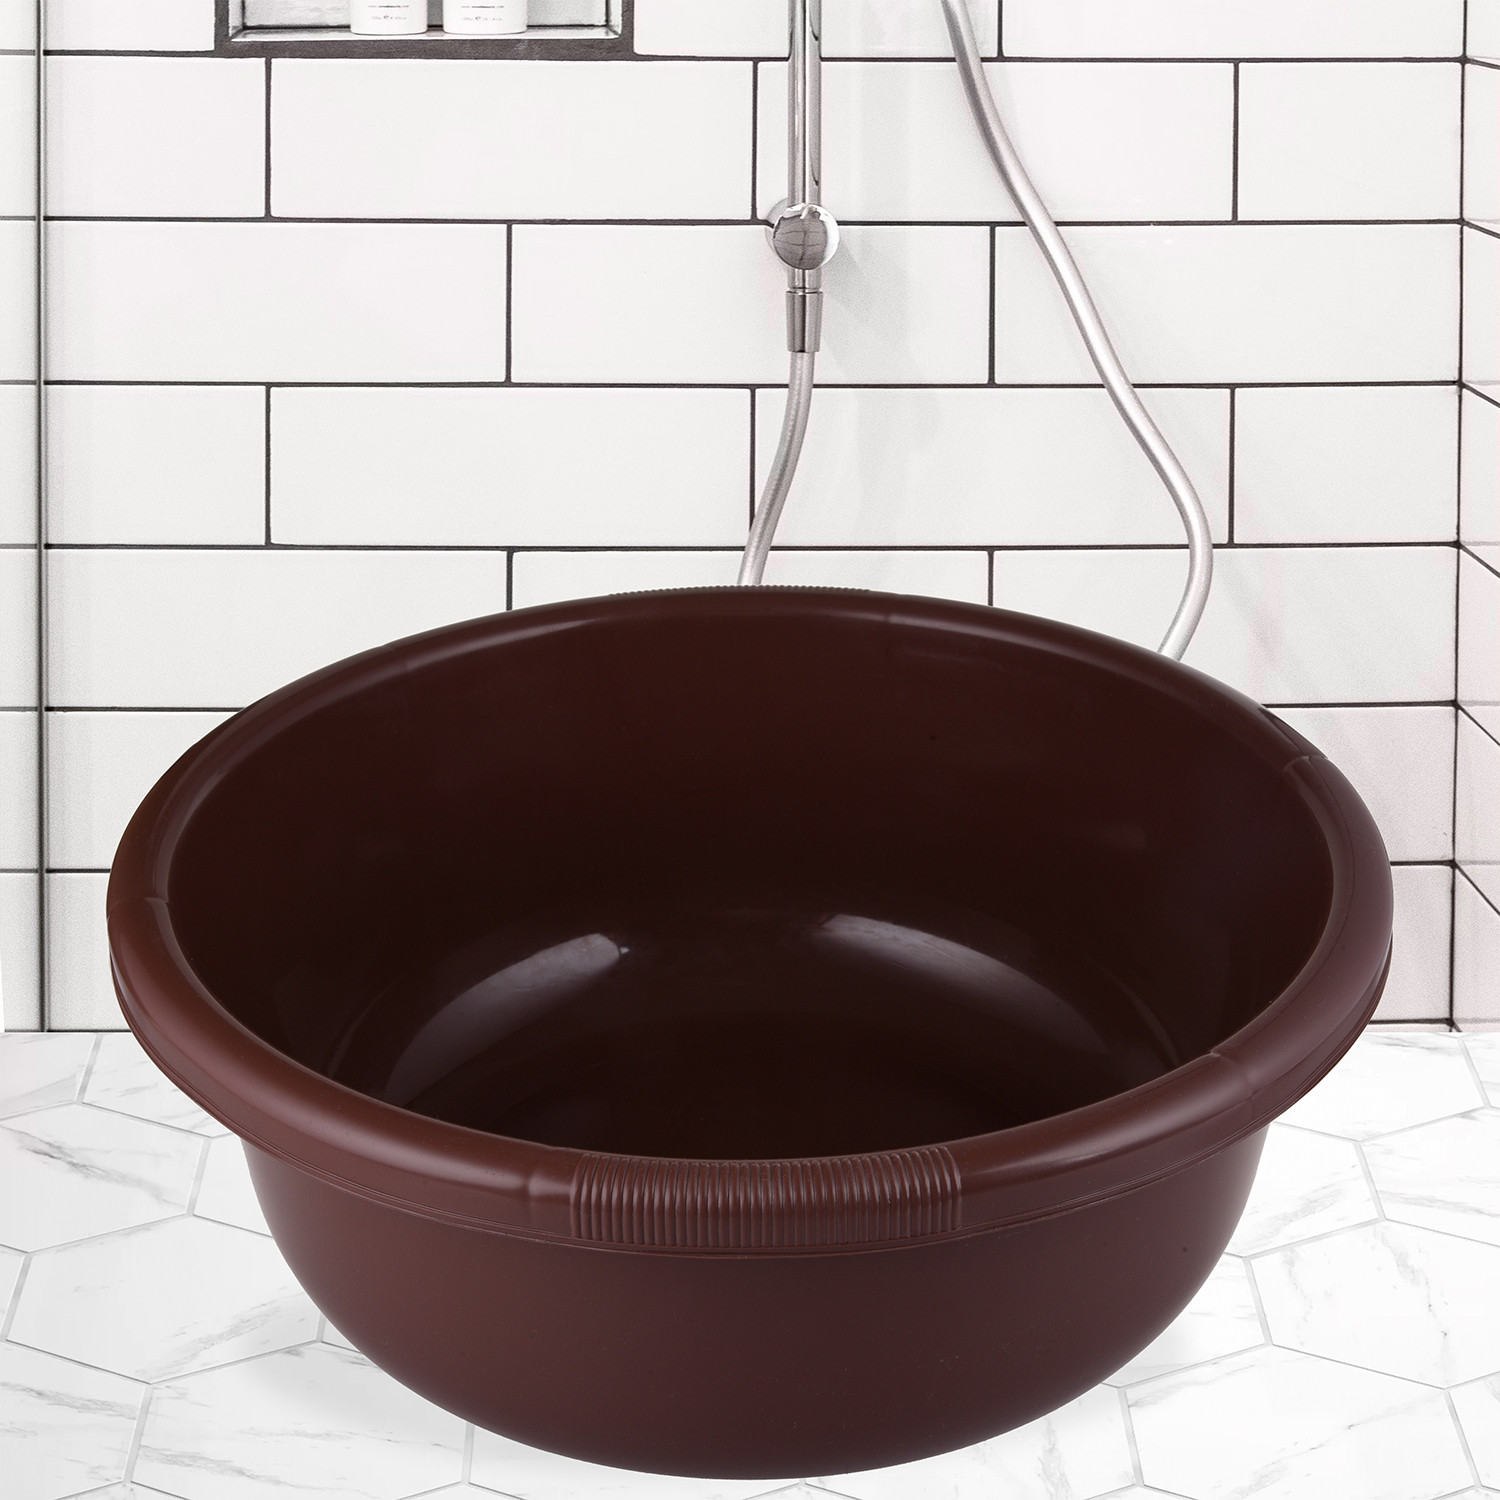 Kuber Industries Bath Tub 38|Versatile Plastic Utility Gaint Tub|Durable Deep Tub for Baby Bathing|Washing Clothes|Feeding Pan|38 Liter|Pack of 2 (Brown & Gray)